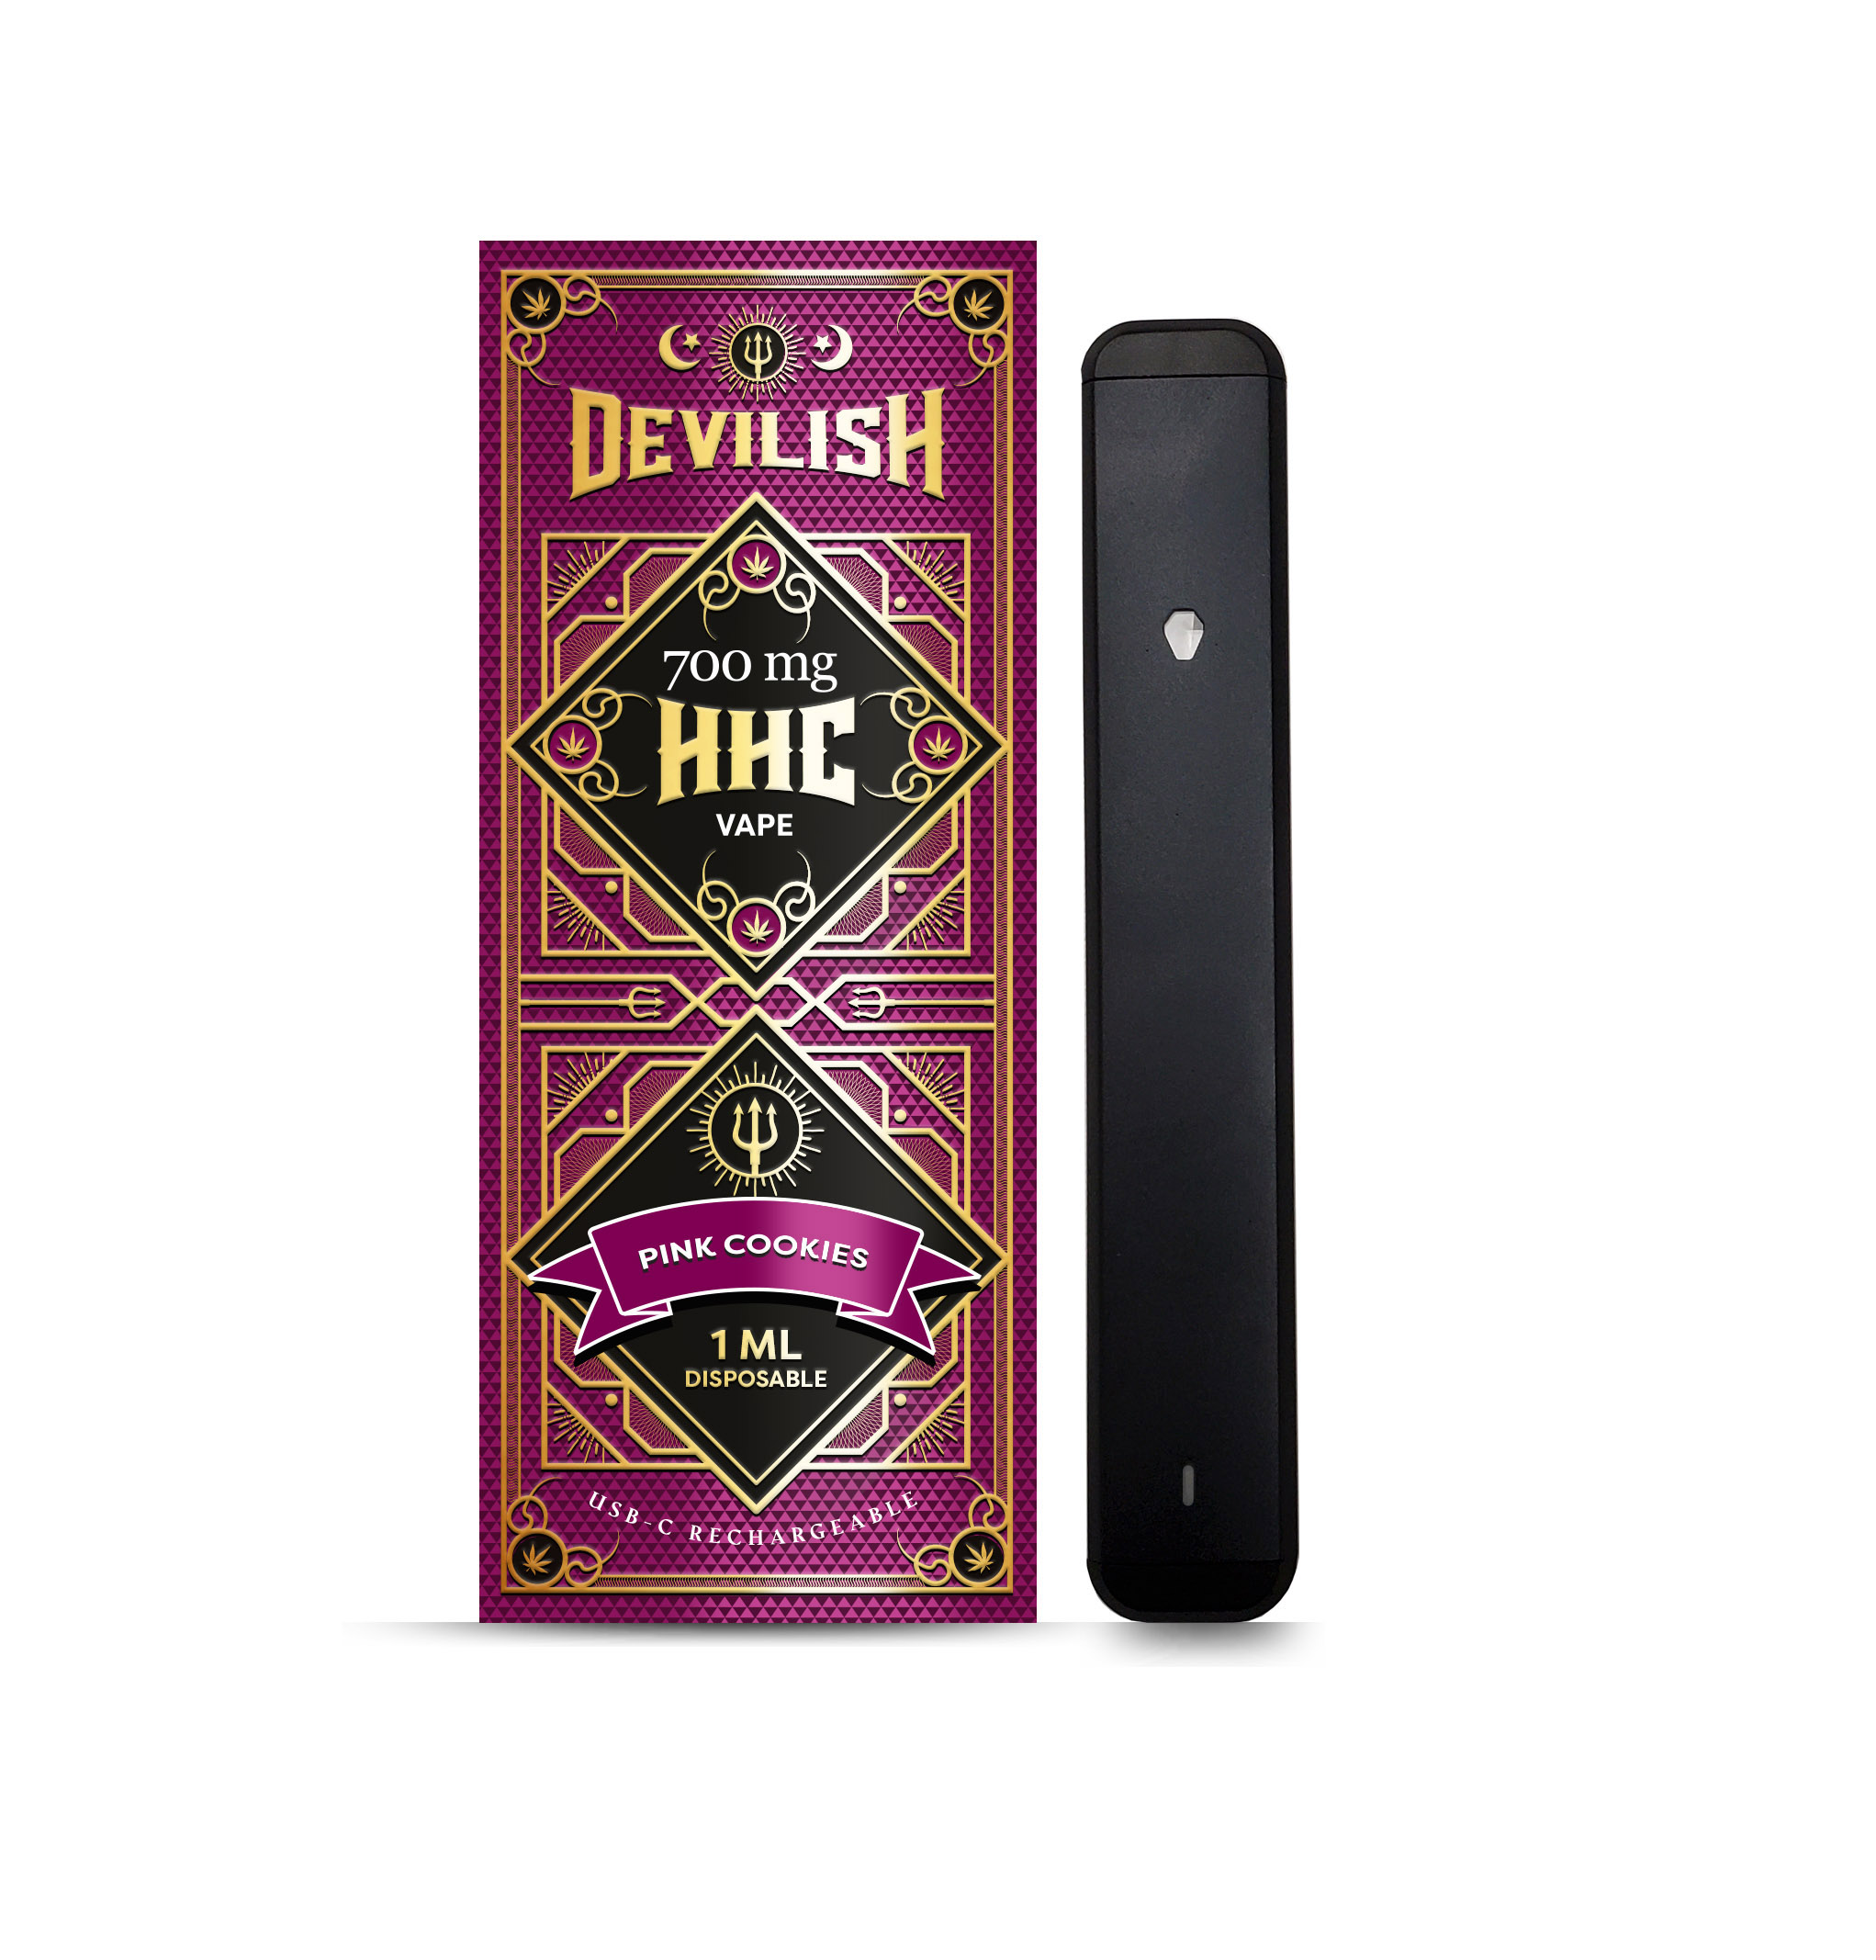 Devilish-700mg-HHC-Pink-Cookies